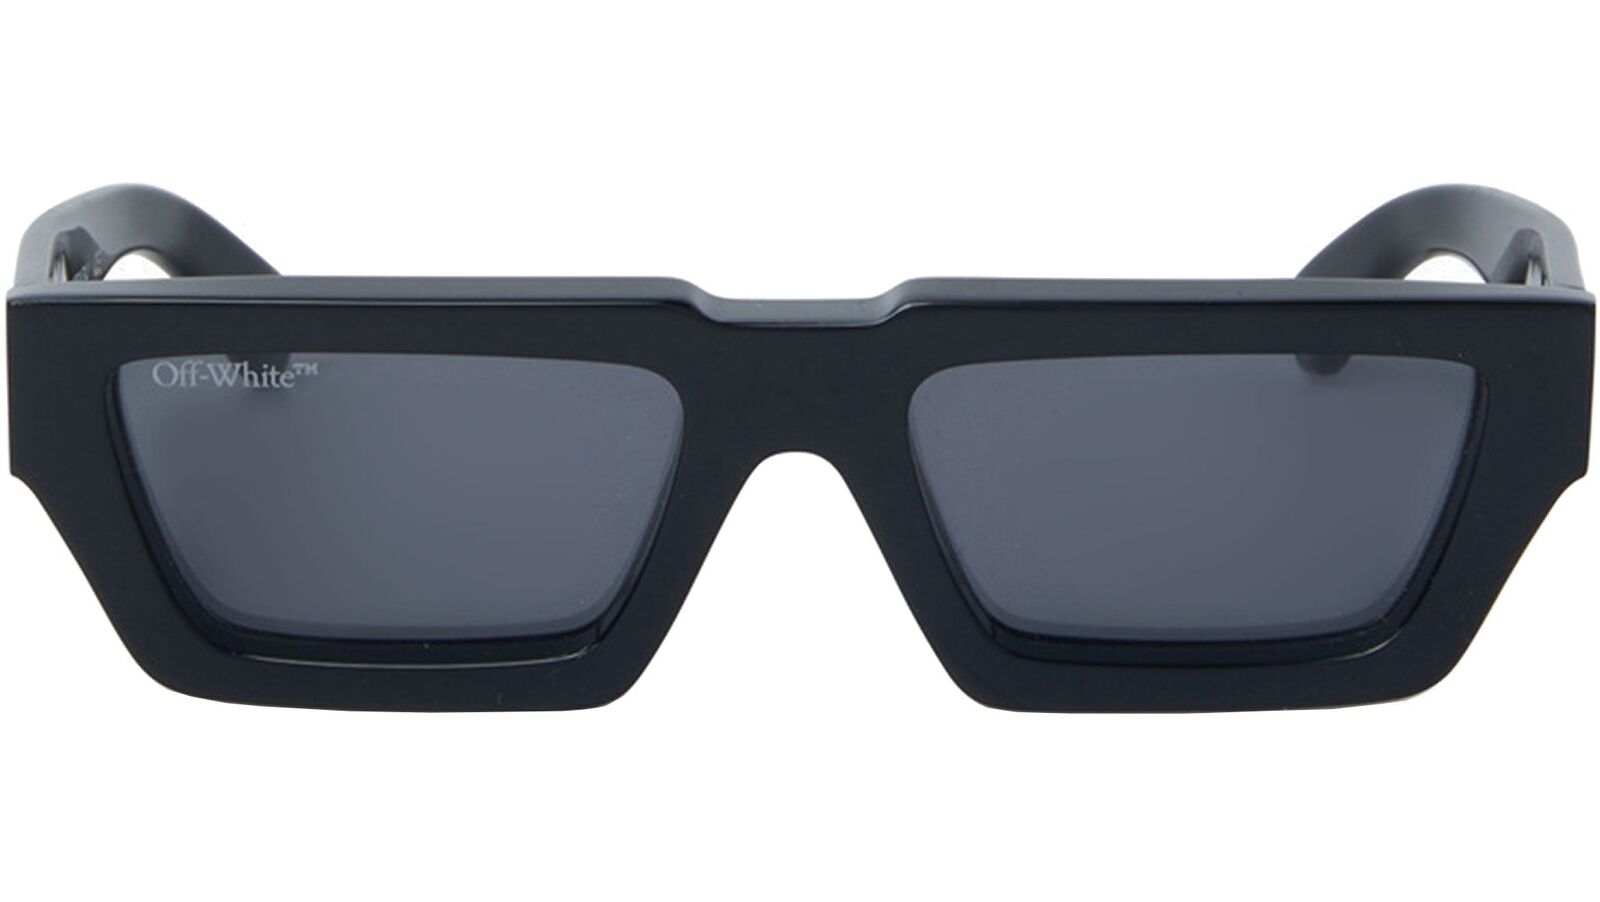 Off-White MANCHESTER BLACK DARK GREY 54mm New Sunglasses